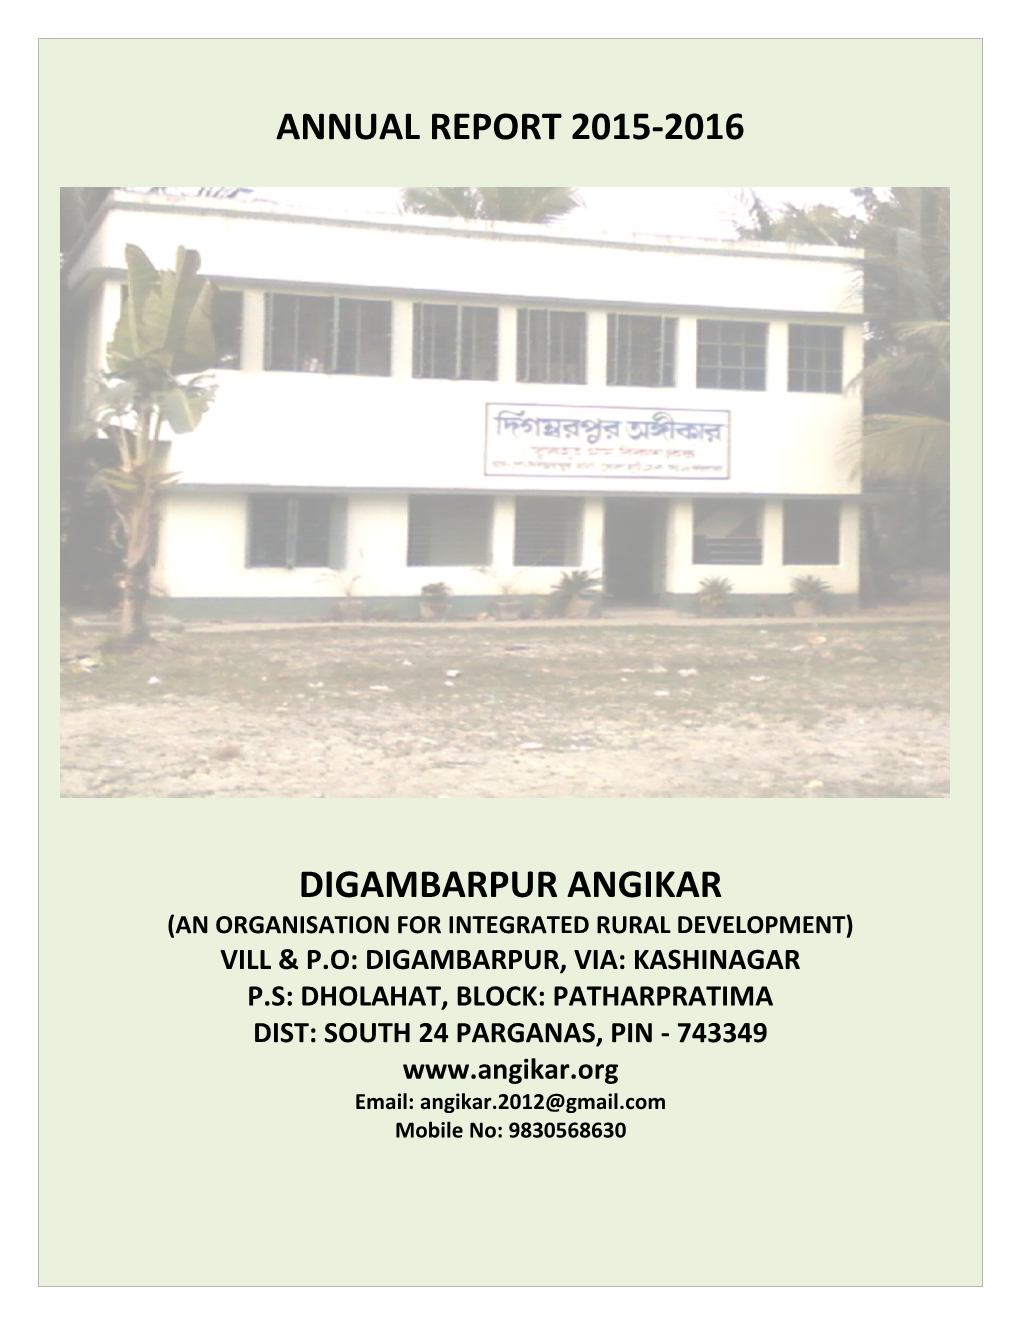 An Organisation for Integrated Rural Development